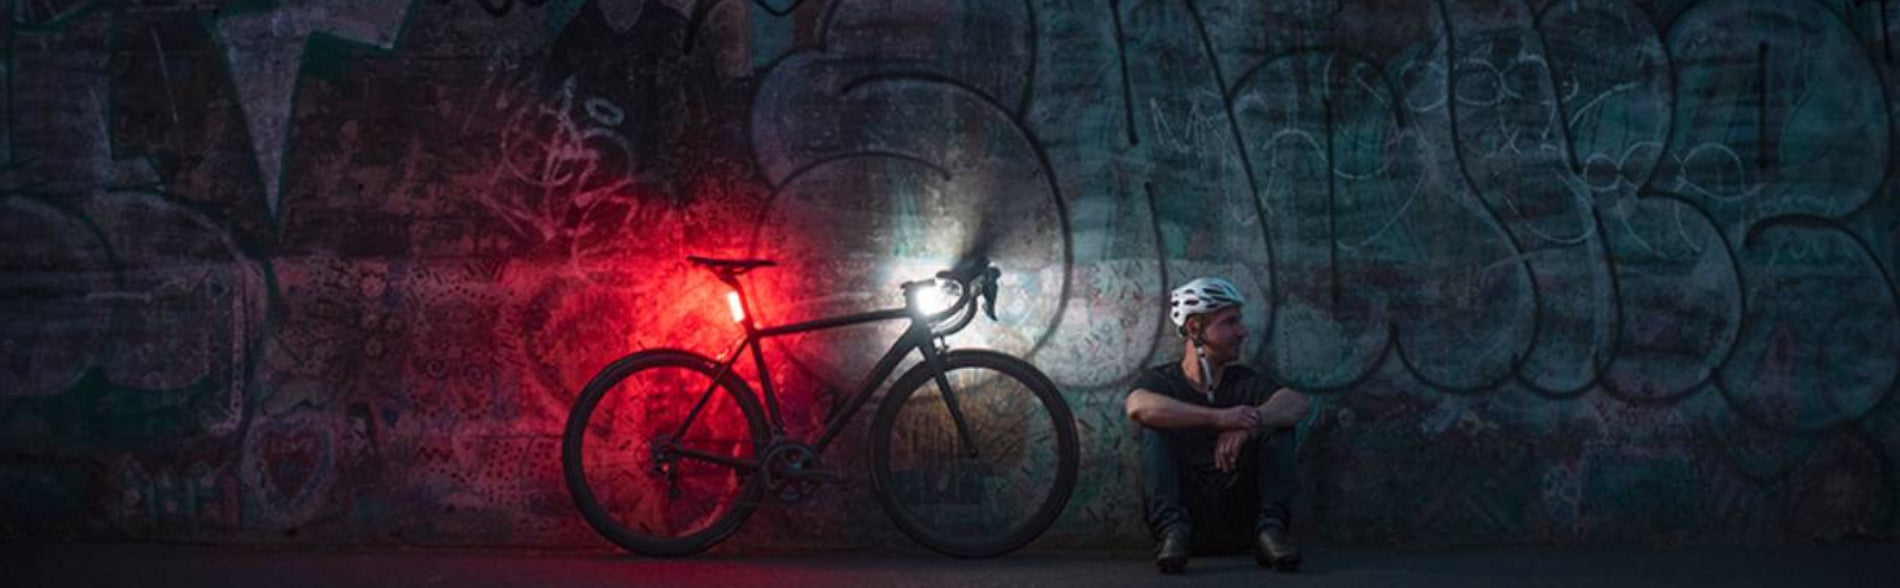 Bike Lounge lighting